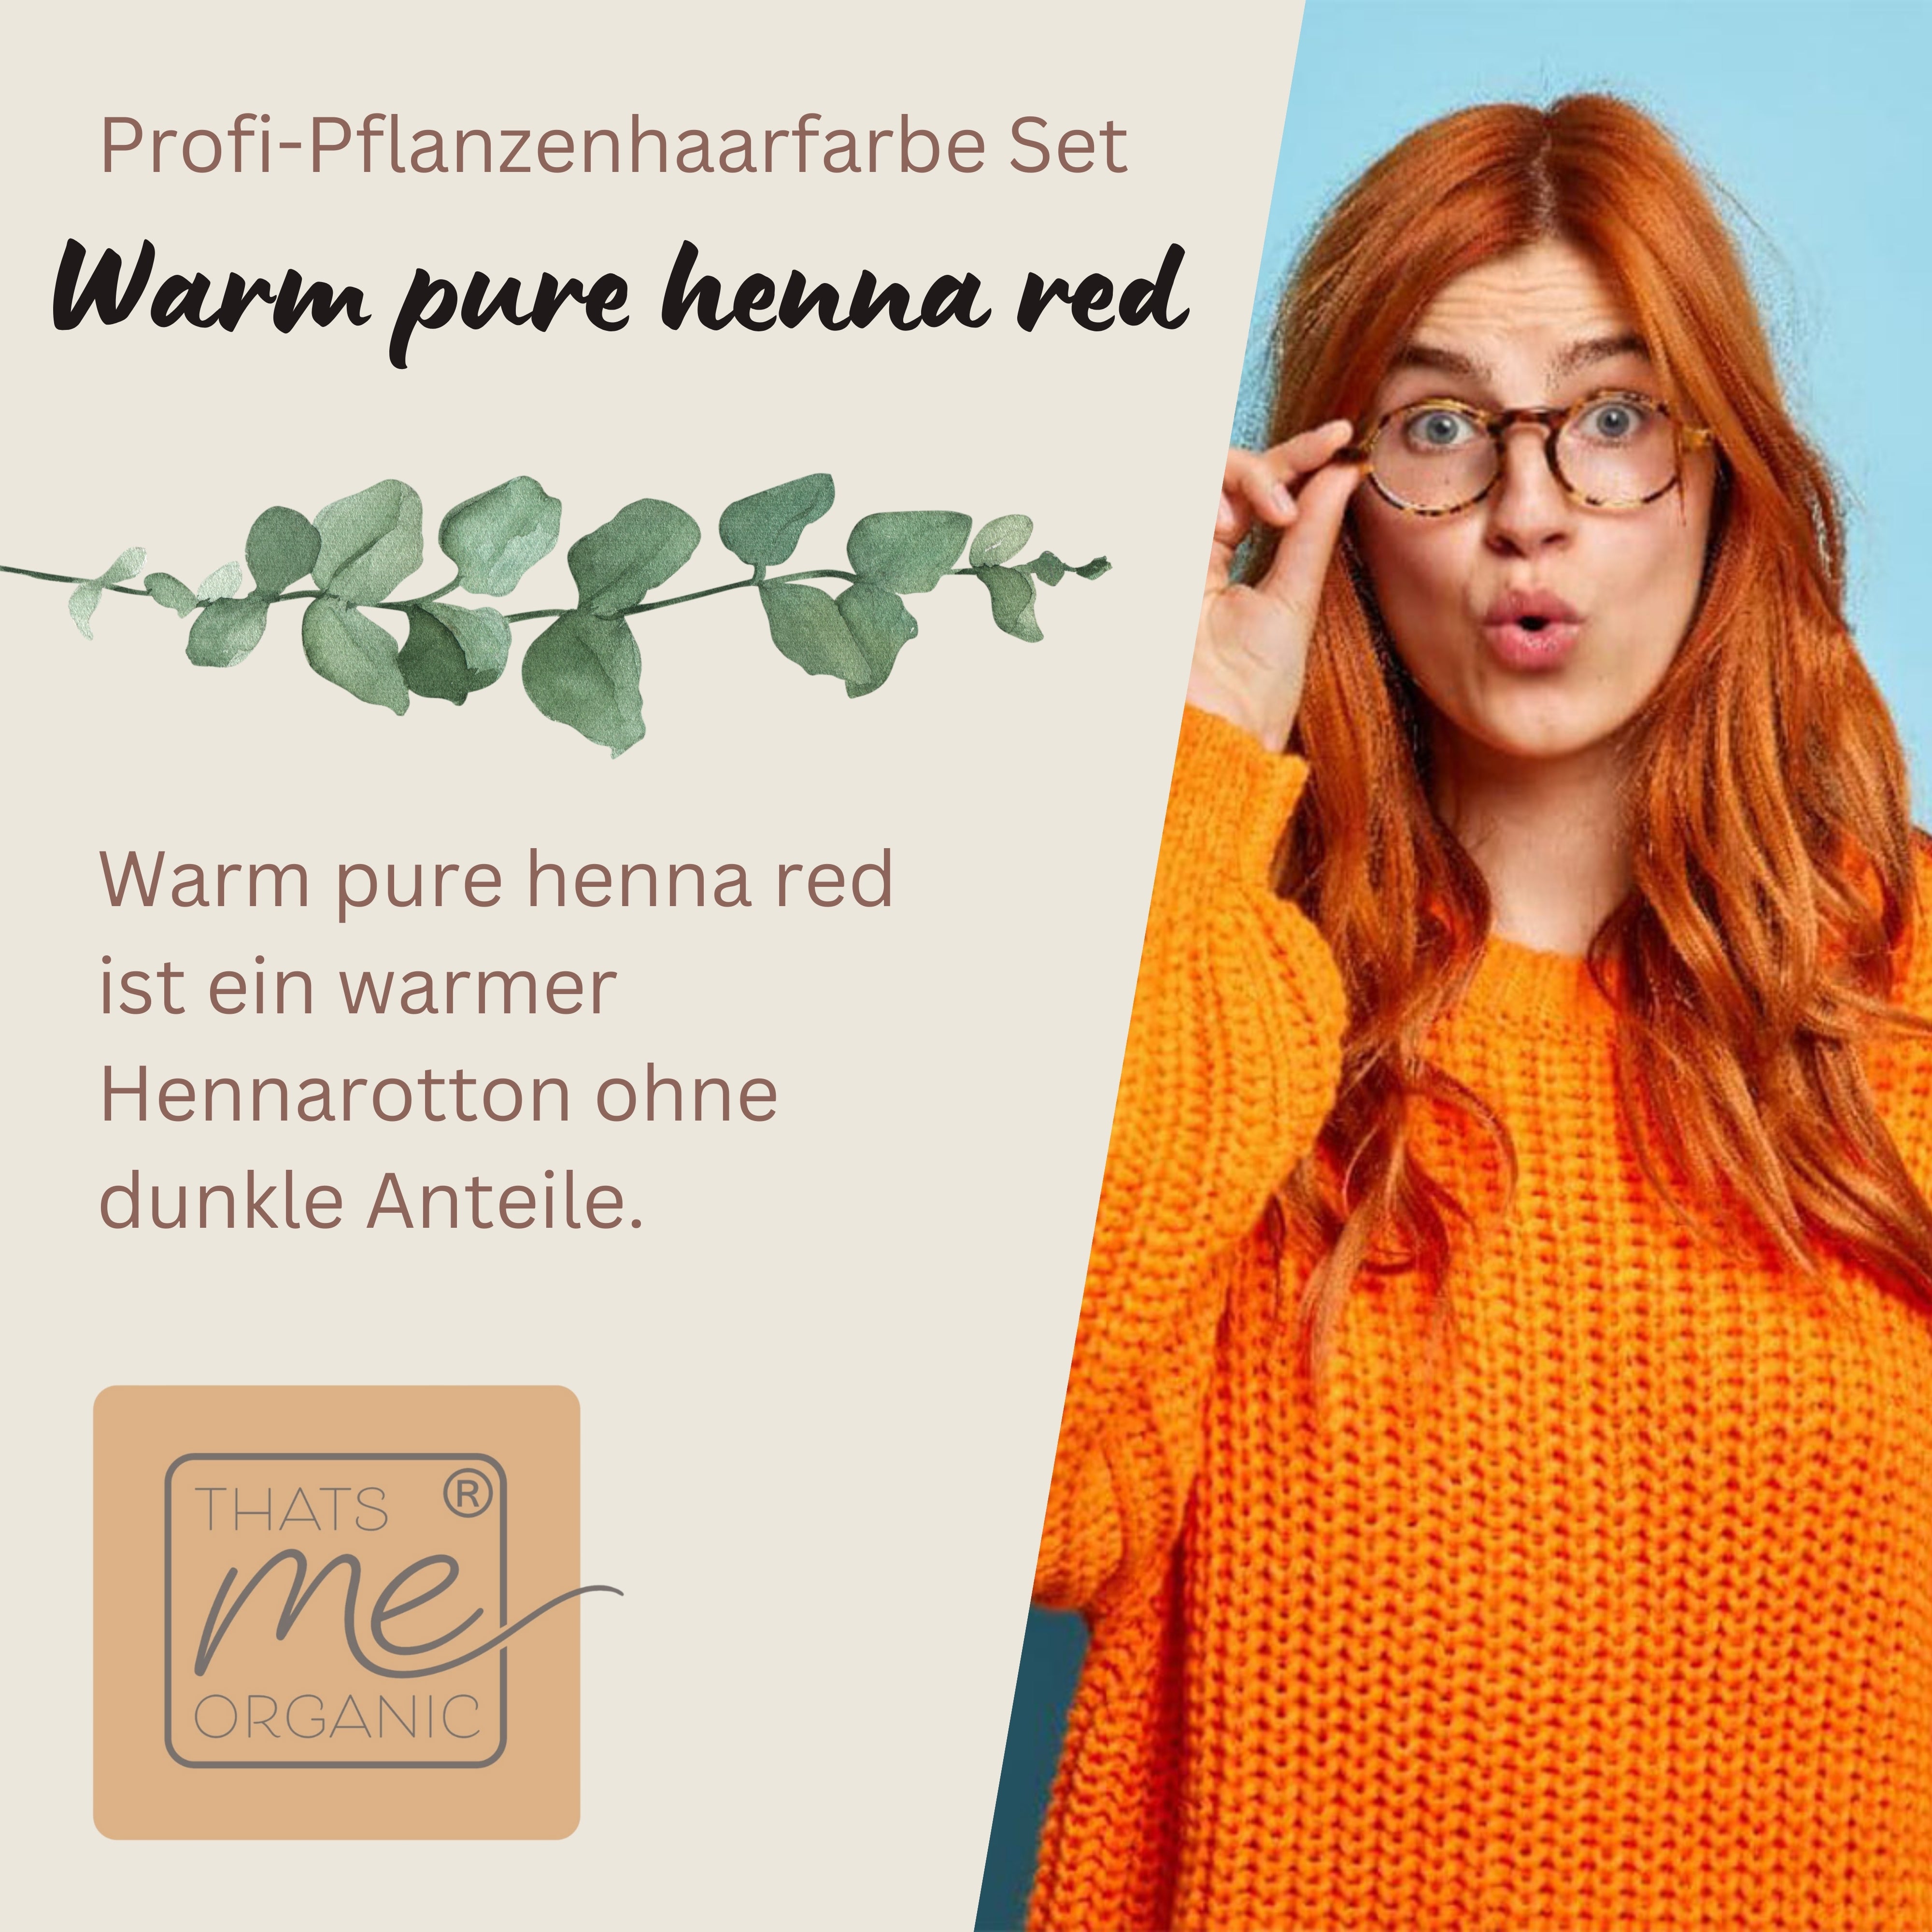 Profi-Pflanzenhaarfarbe SET "warmes rotes Henna pur - warm pure henna red"